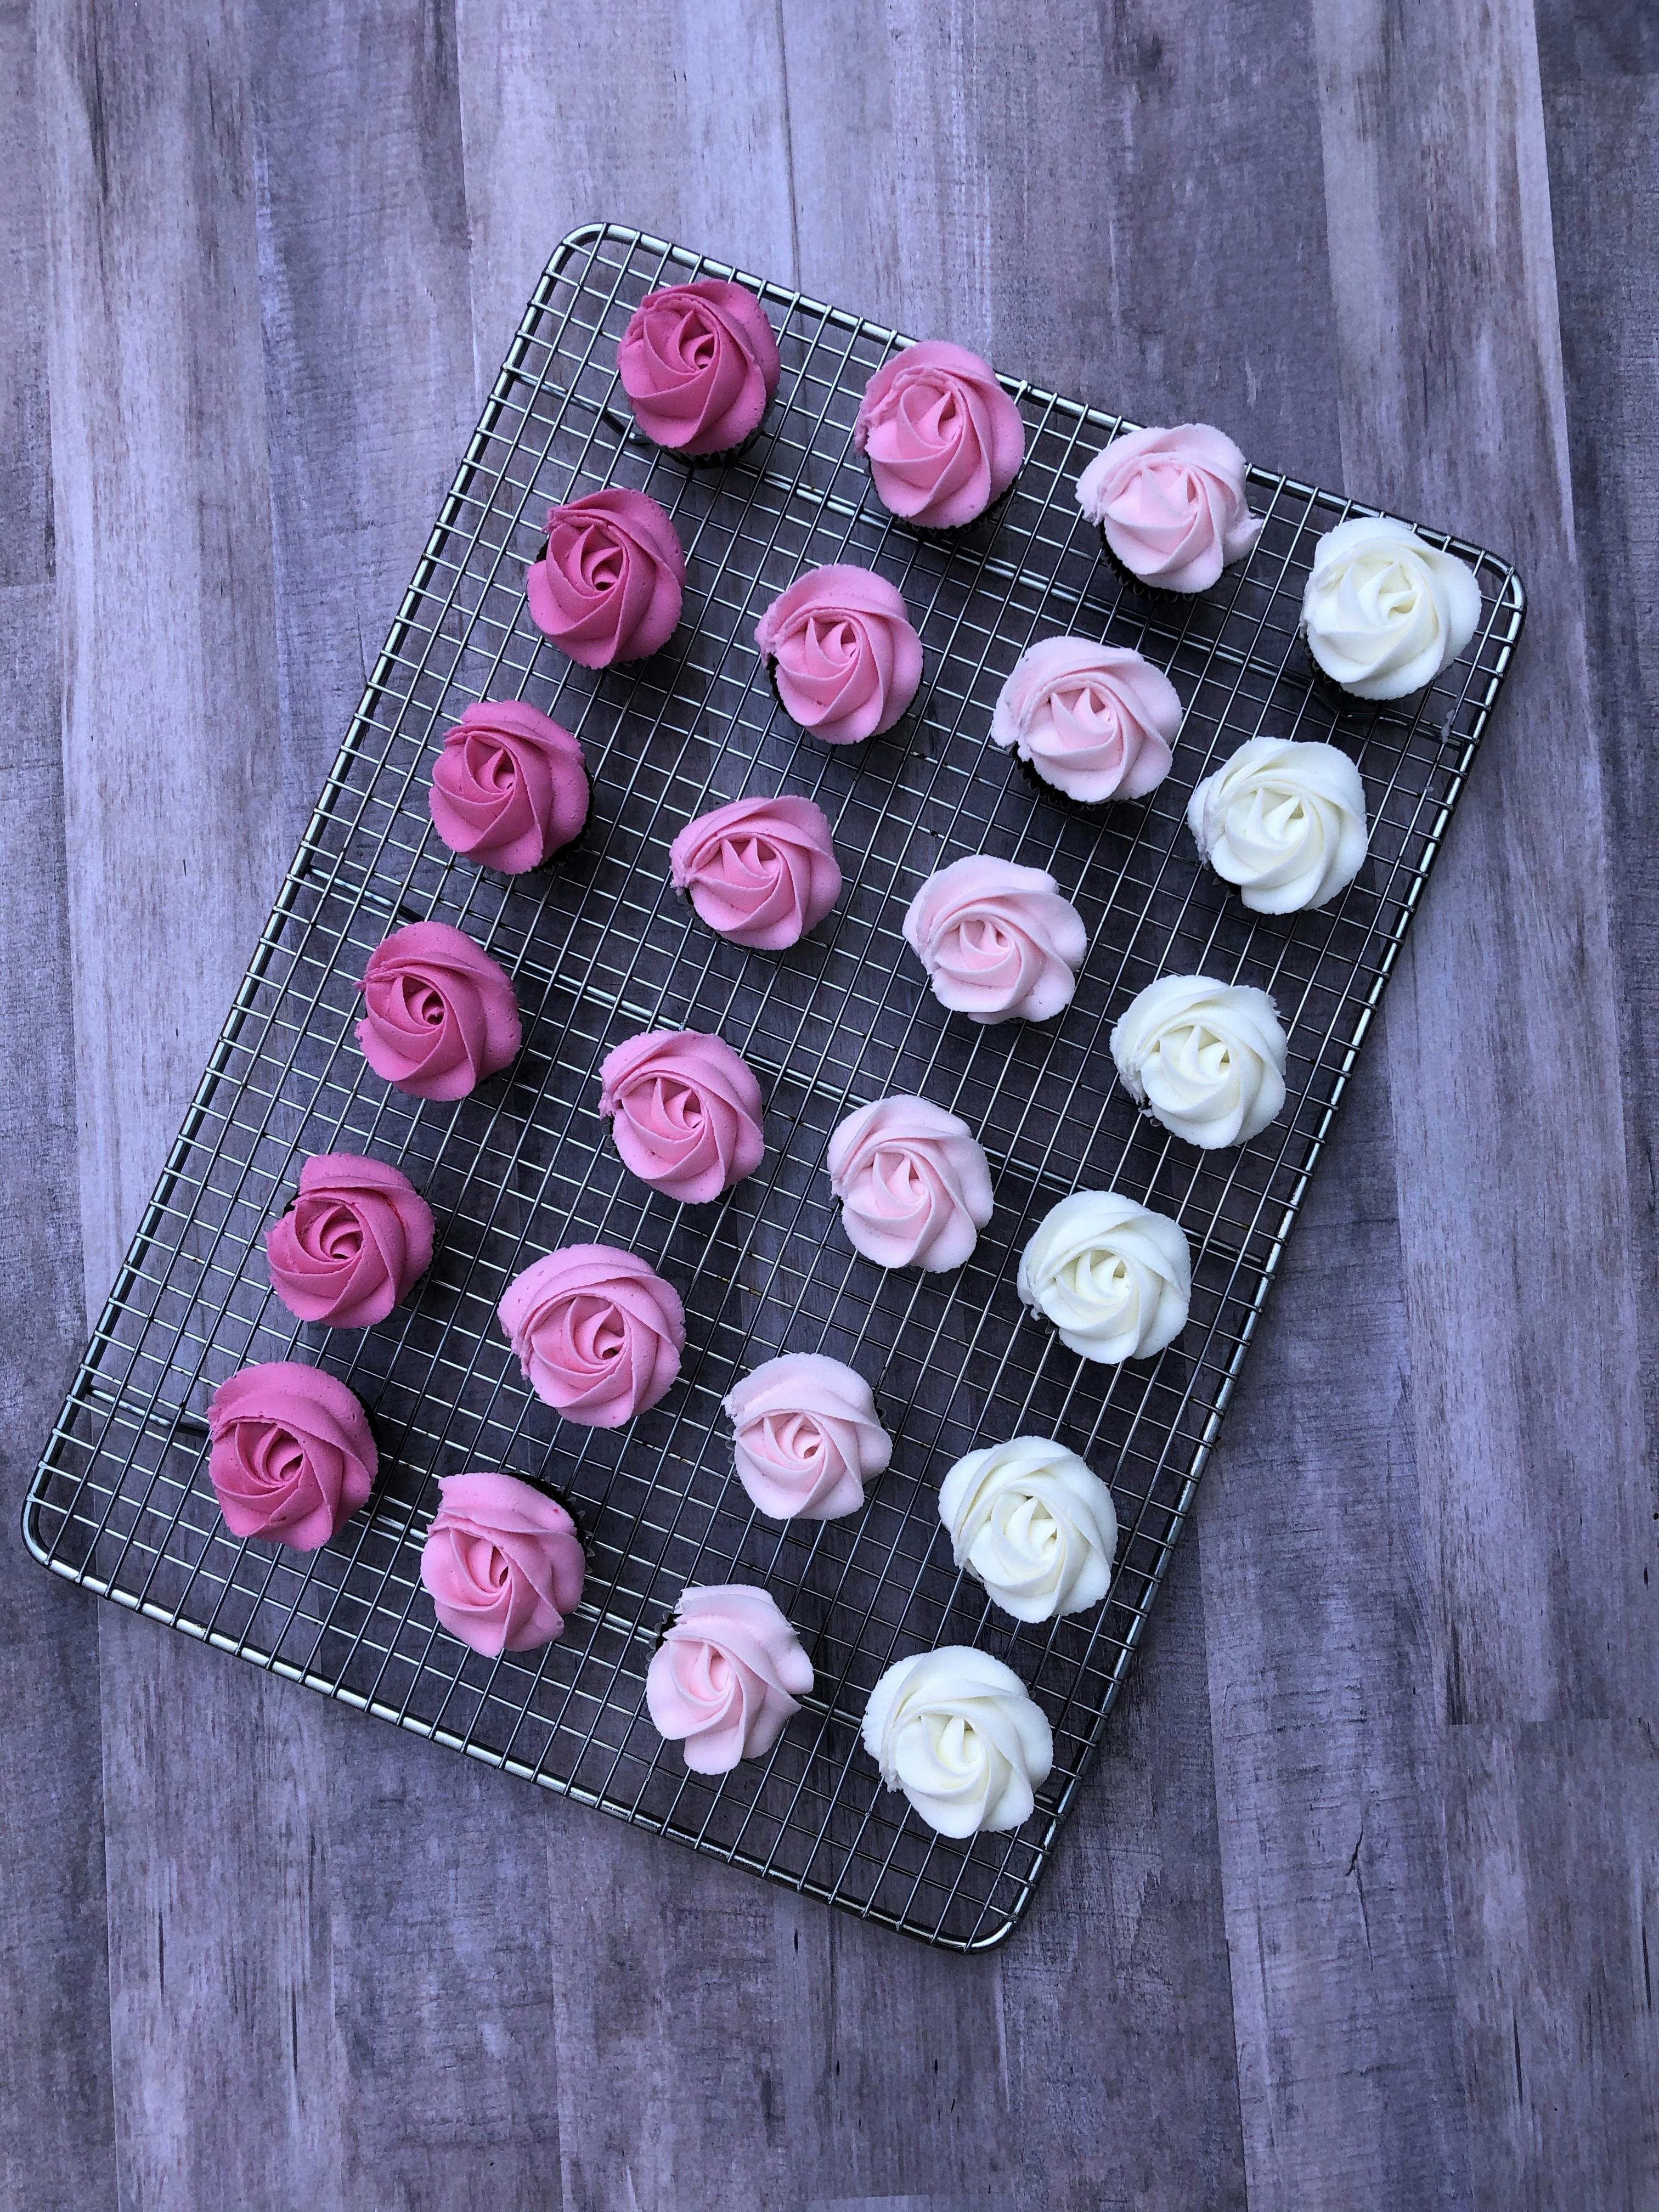 Mini Cupcakes: Ombre Rosettes